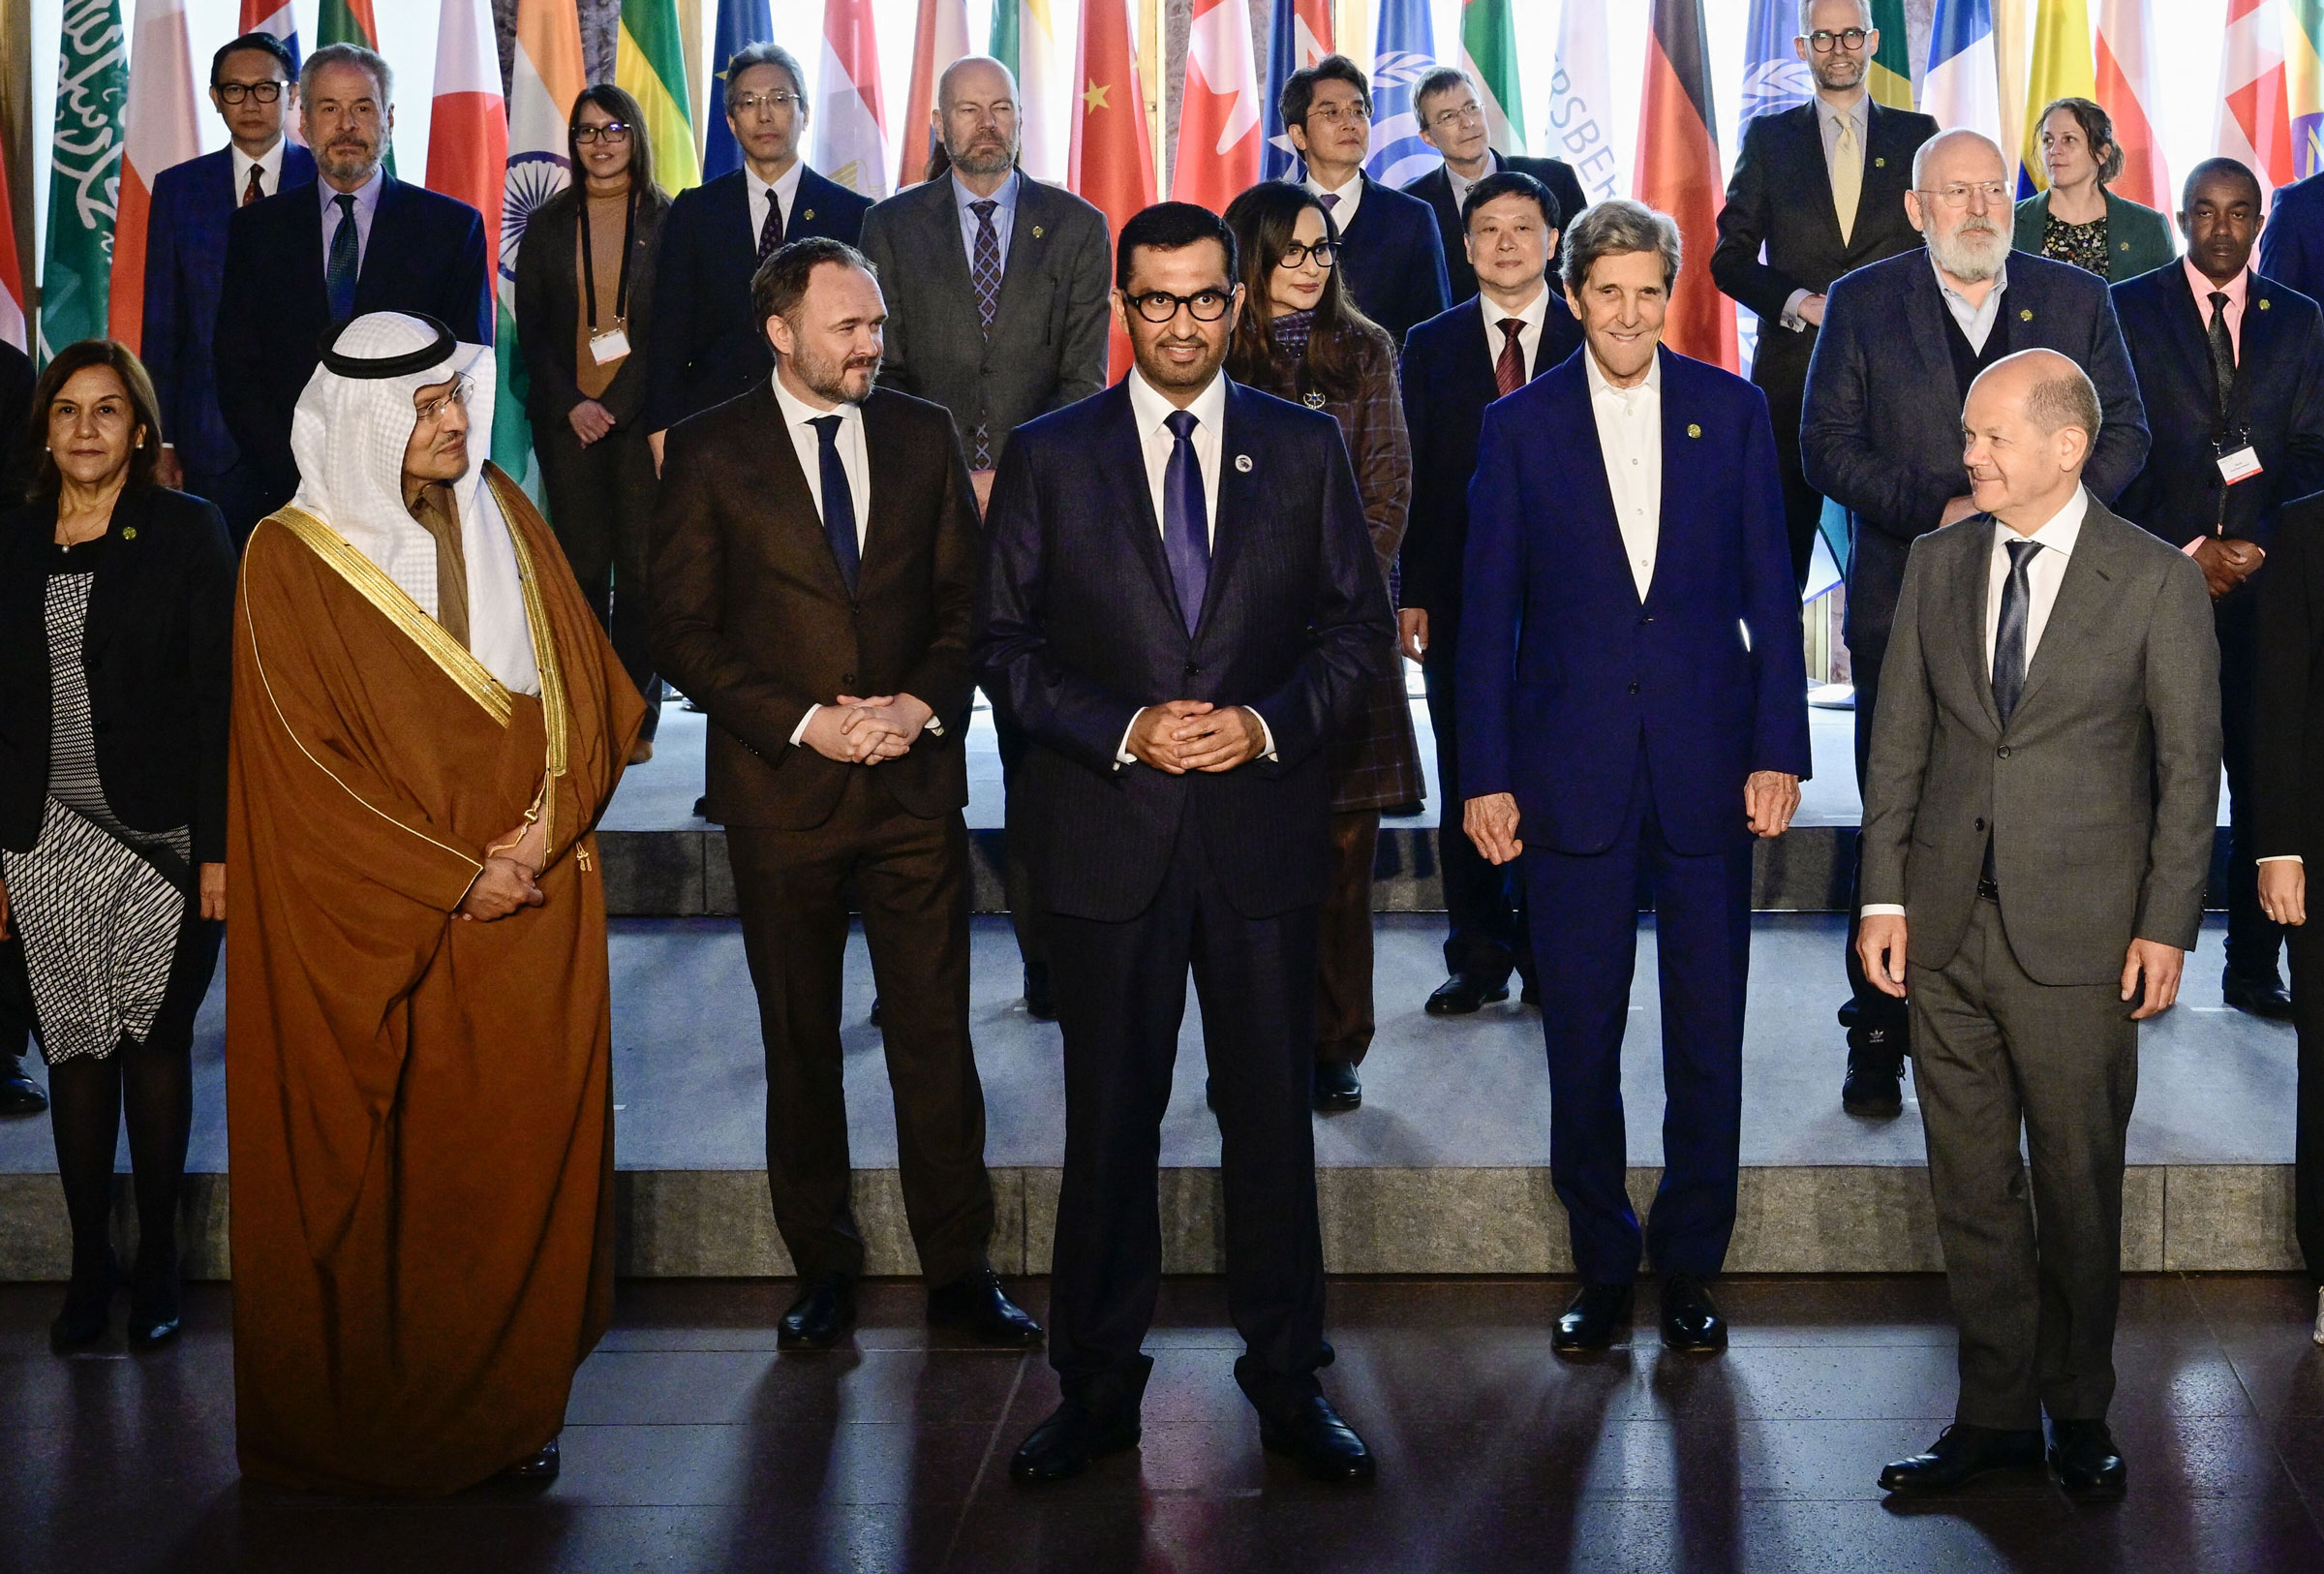 Sultan Al Jaber, center, among participants including German Chancellor Olaf Scholz and U.S. Climate Envoy John Kerry